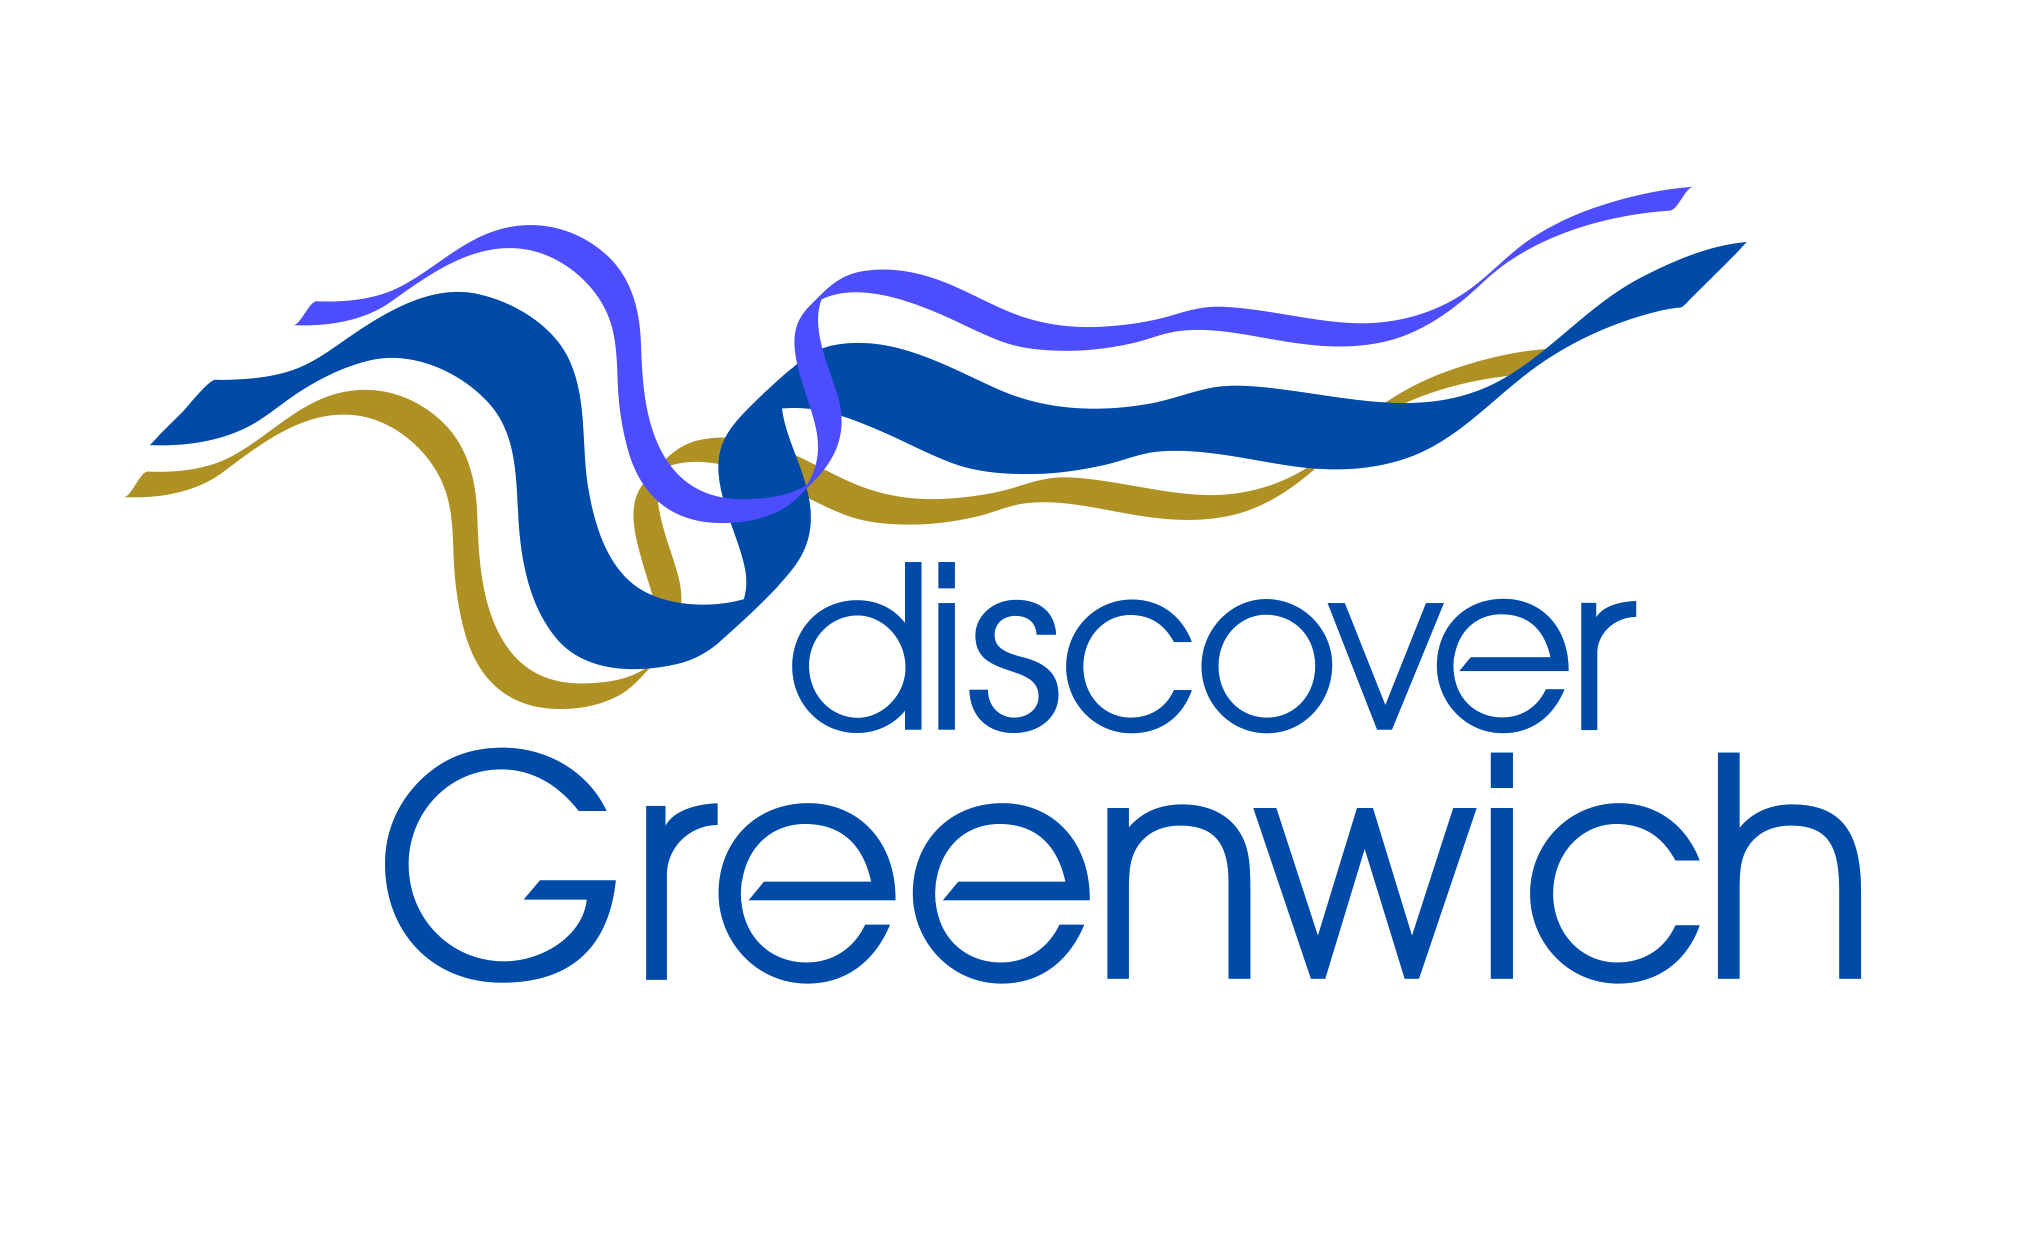 Discover Greenwich